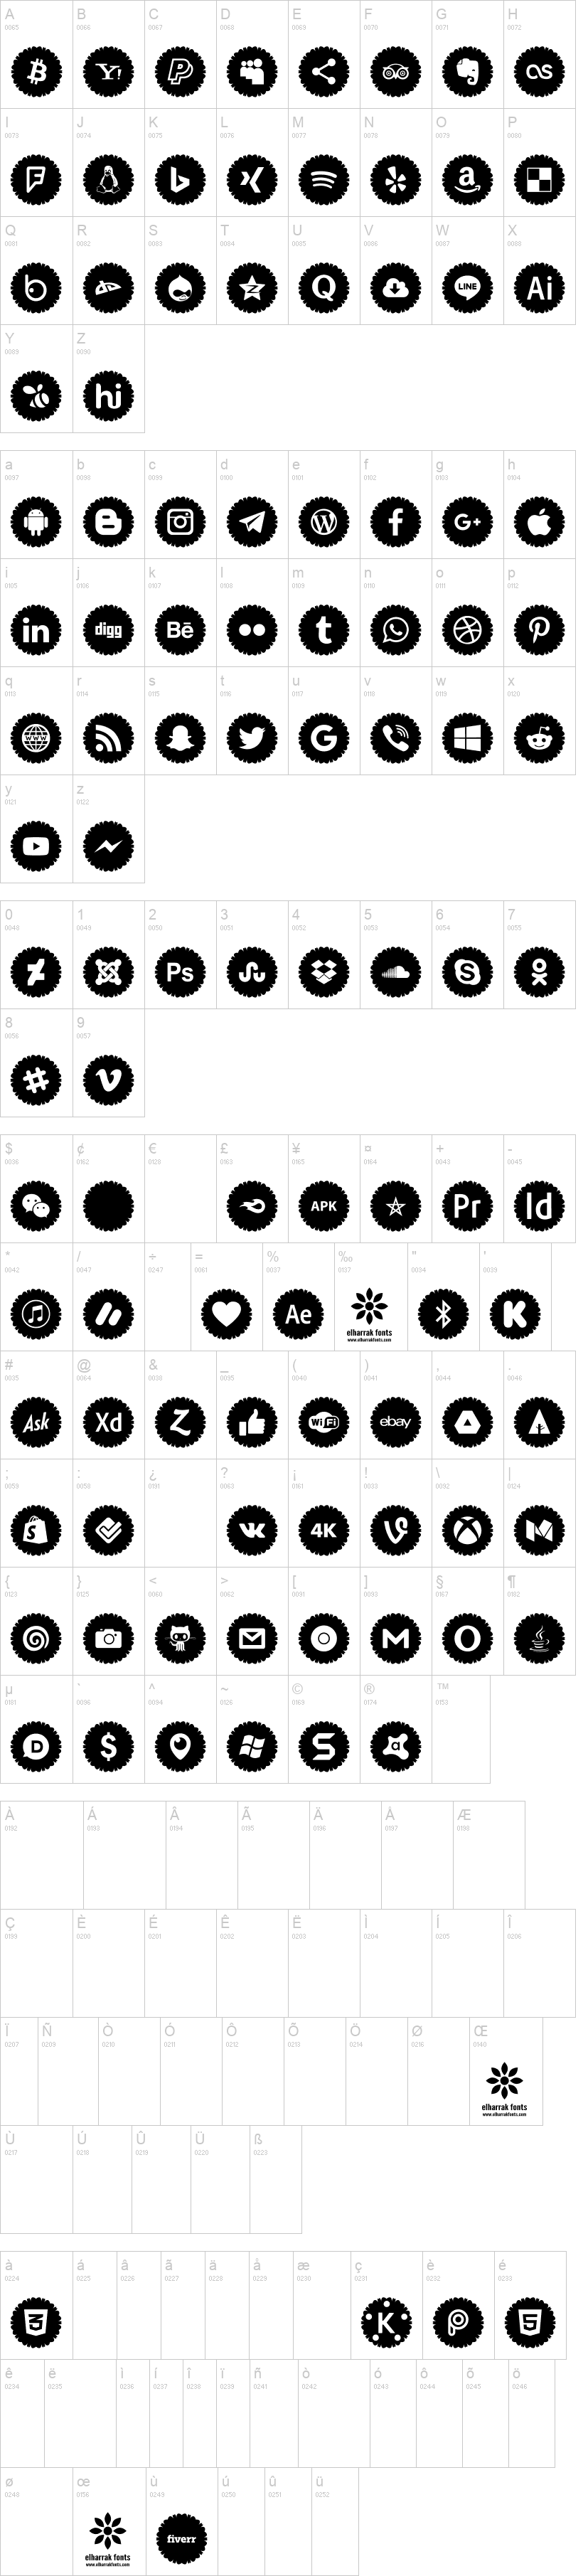 Font 120 Logos